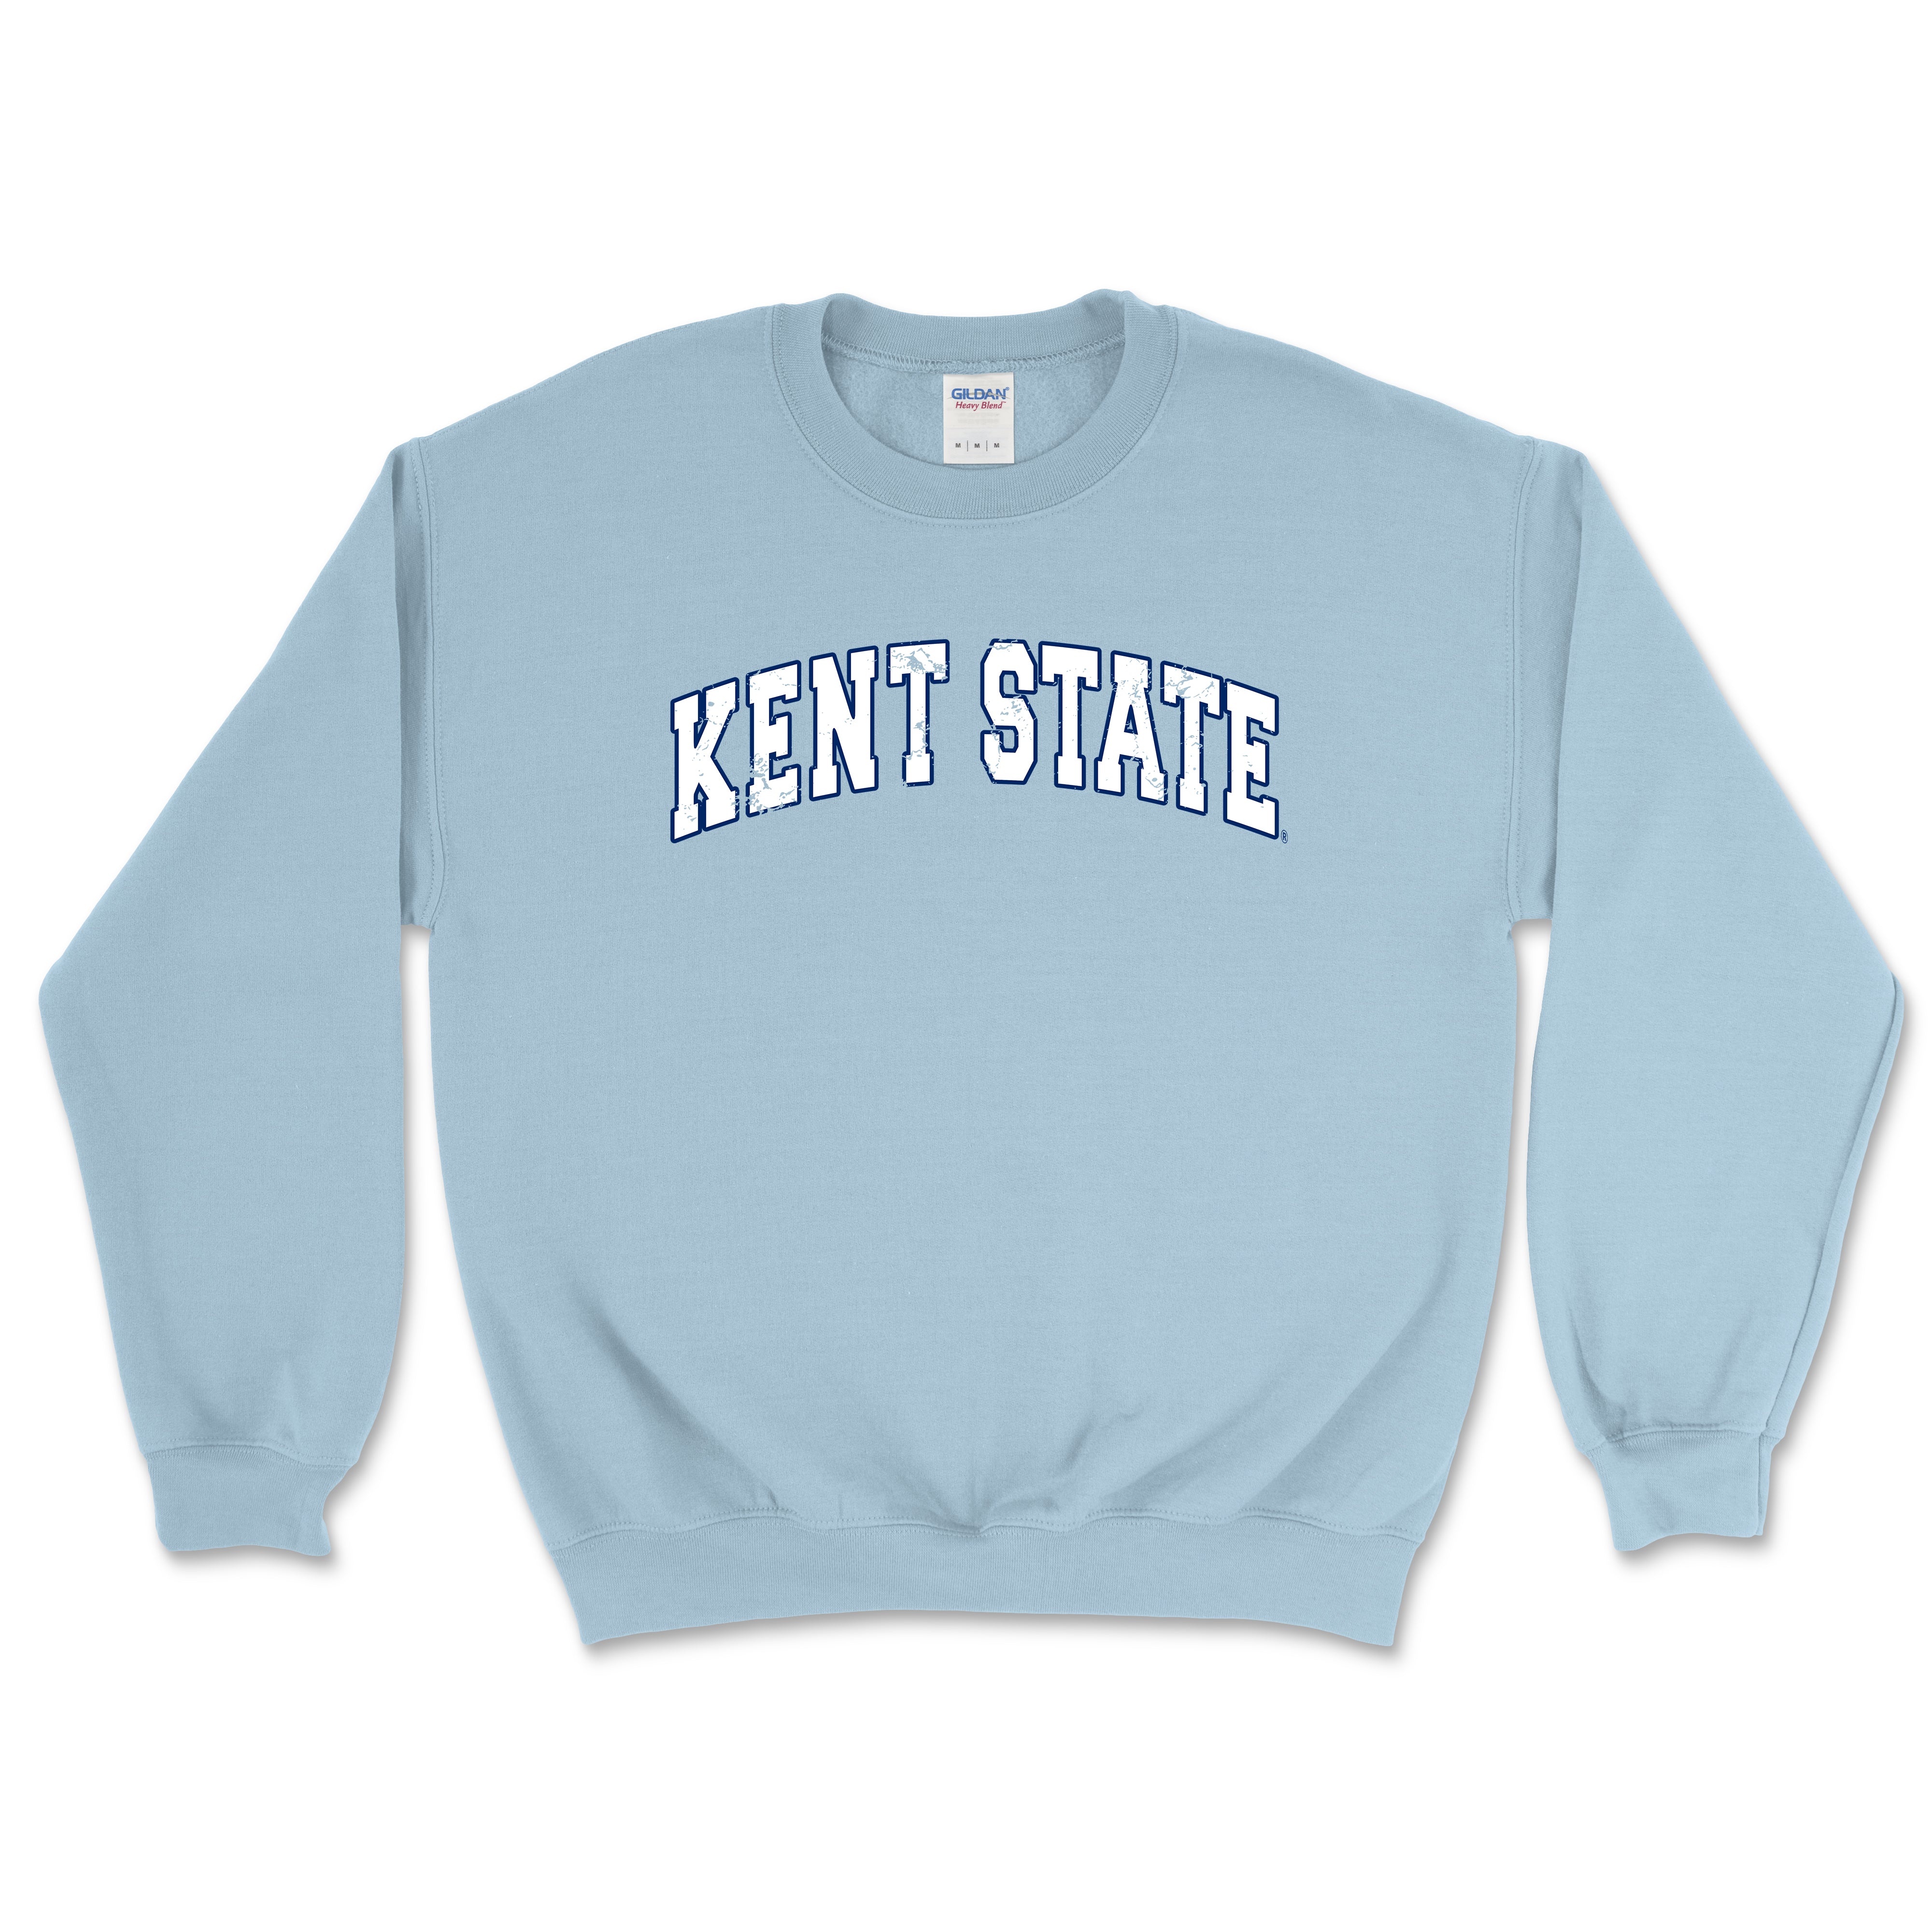 Kent State Light Blue Arched Crewneck Sweatshirt